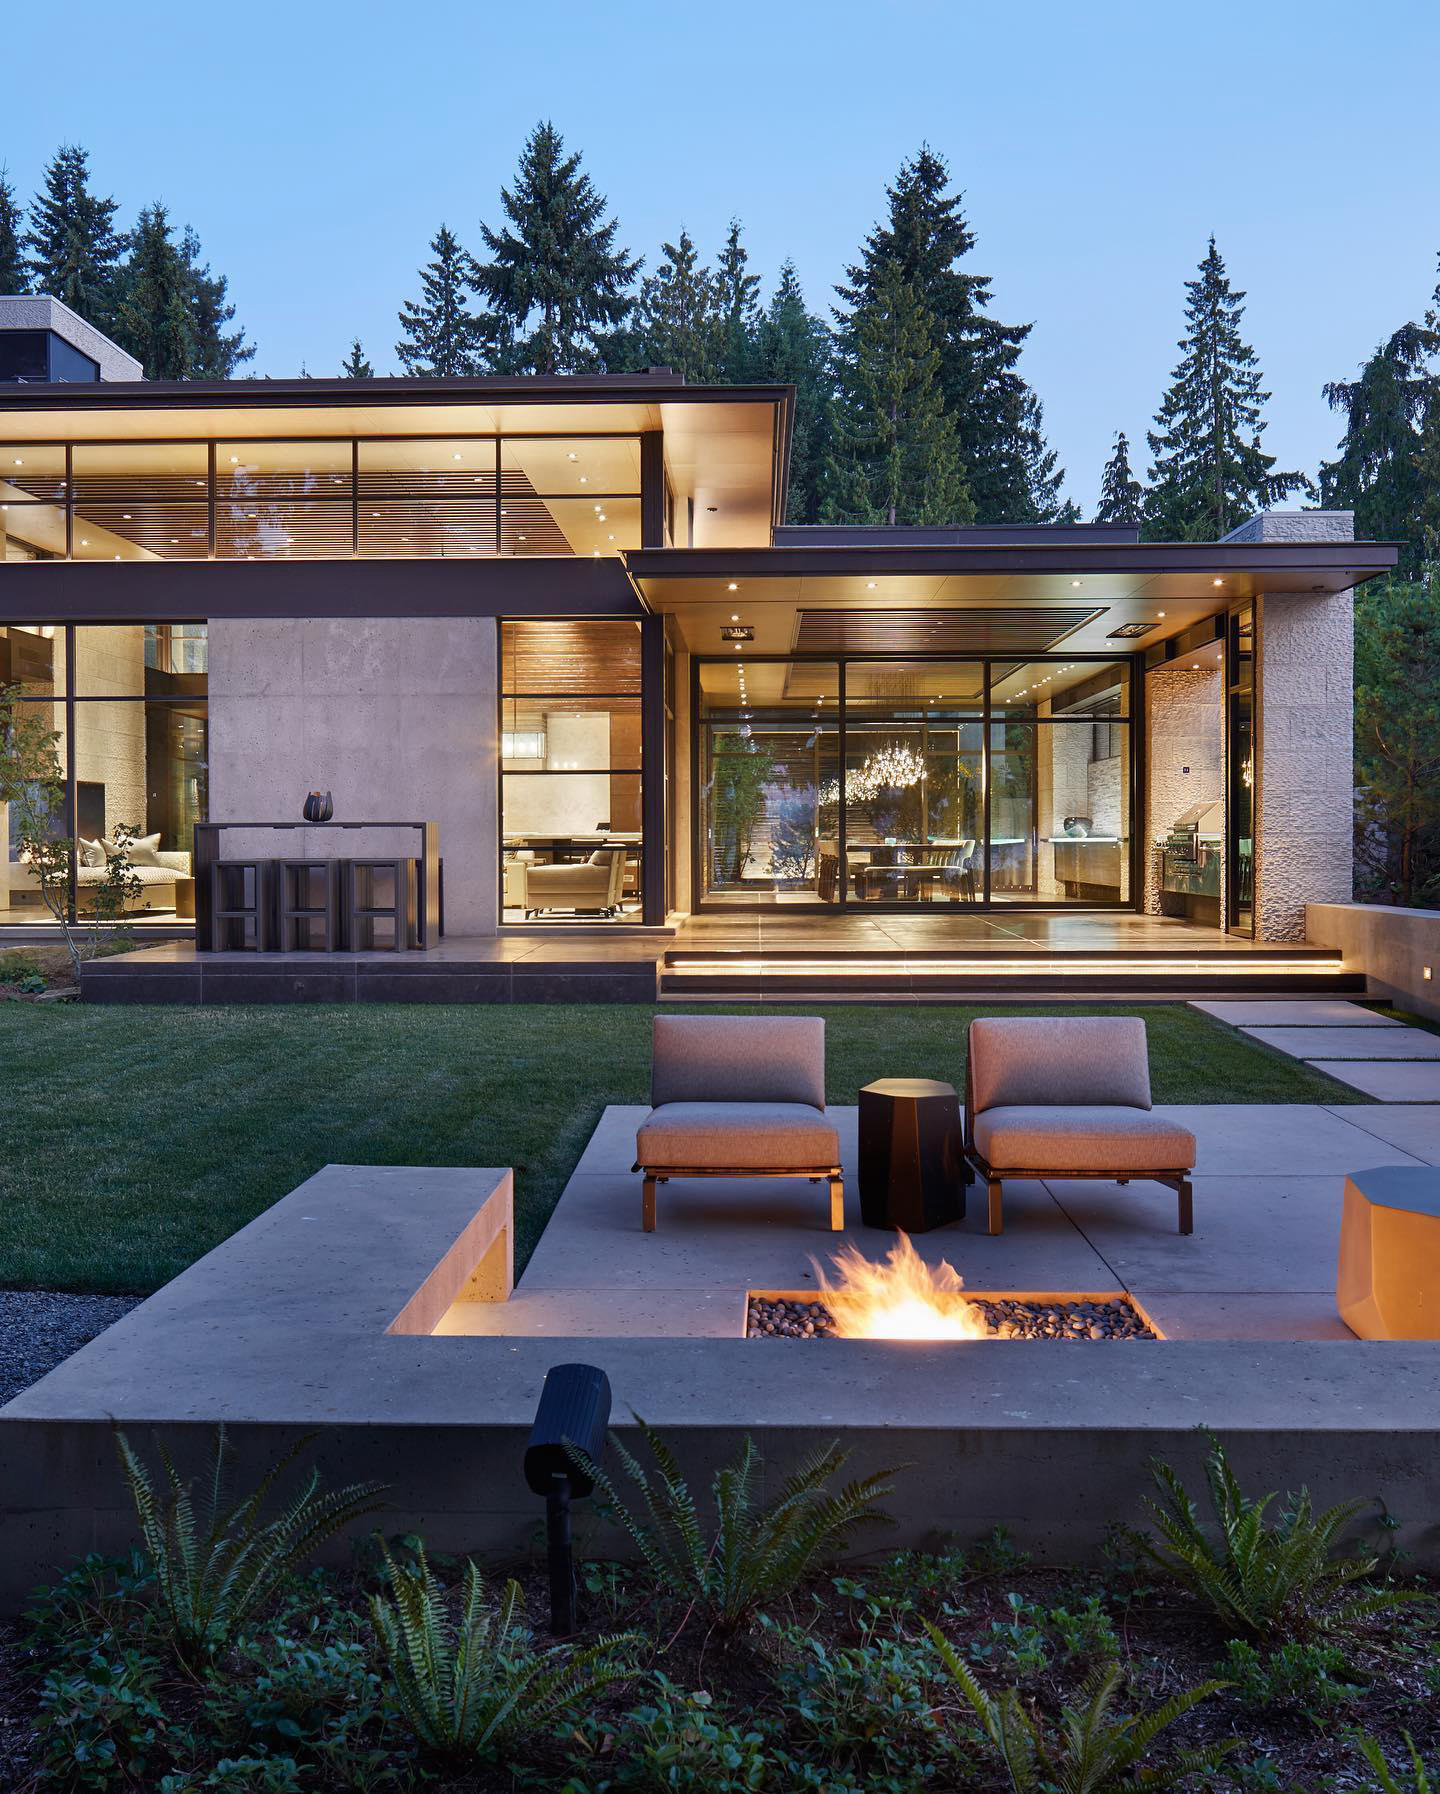 image  1 Amazing Architecture - Kor Architects #kor_architects reveals The Point in Western Washington Read m